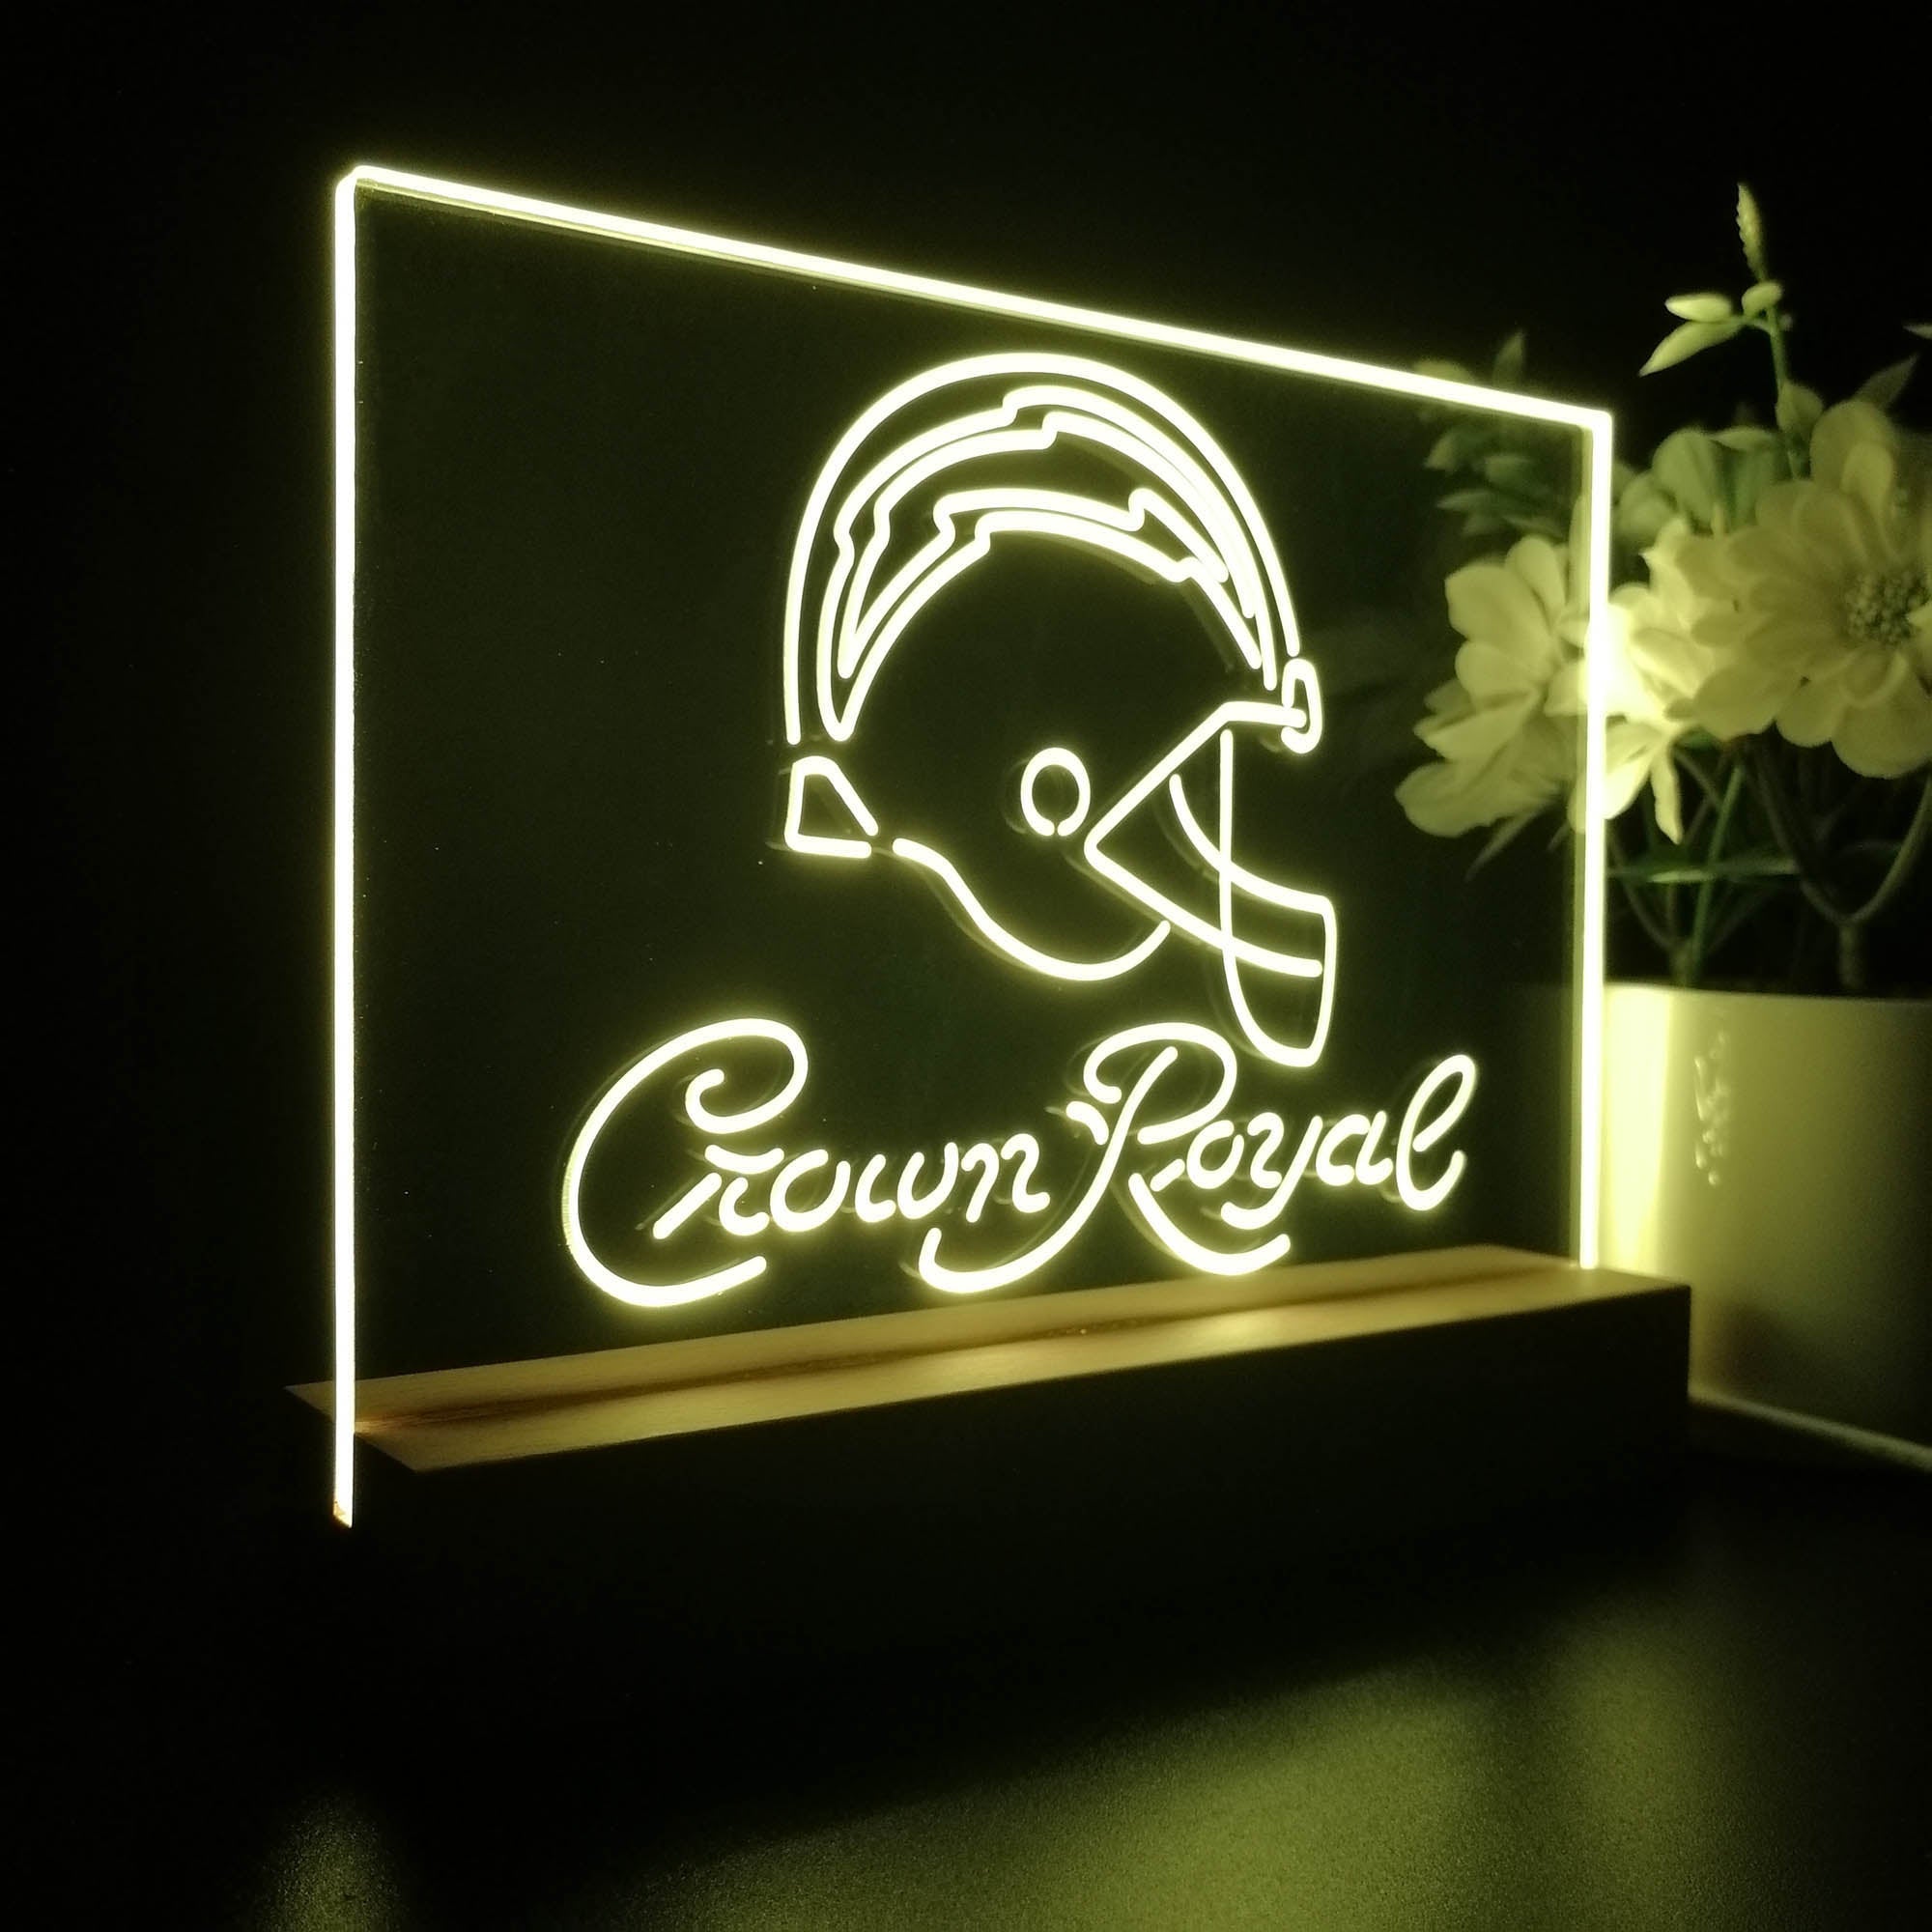 Crown Royal Bar Los Angeles Chargers Est. 1960 Night Light Pub Bar Lamp